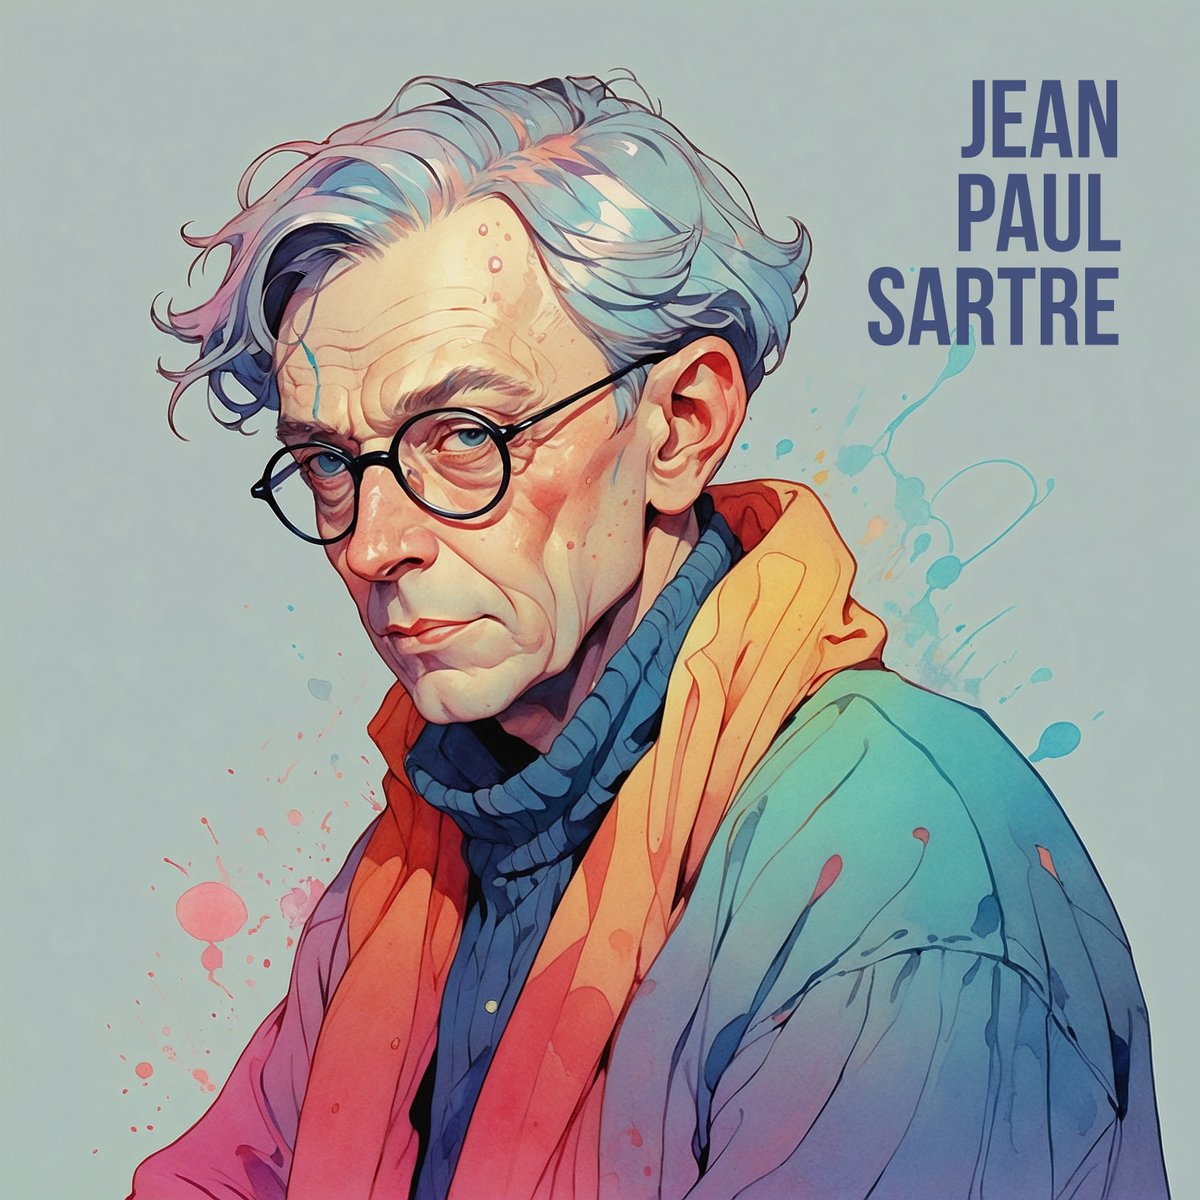 Jean Paul Sartre
#sartre #jeanpaulsartre #author #artcommunity #authors #illustration #illustrator #booklover #famousportraits #philosophy
#aiartcommunity #famous #publishing #bookphotography #bookpublishing #bookpublisher #philosopher #cartoon #portrait #kitap